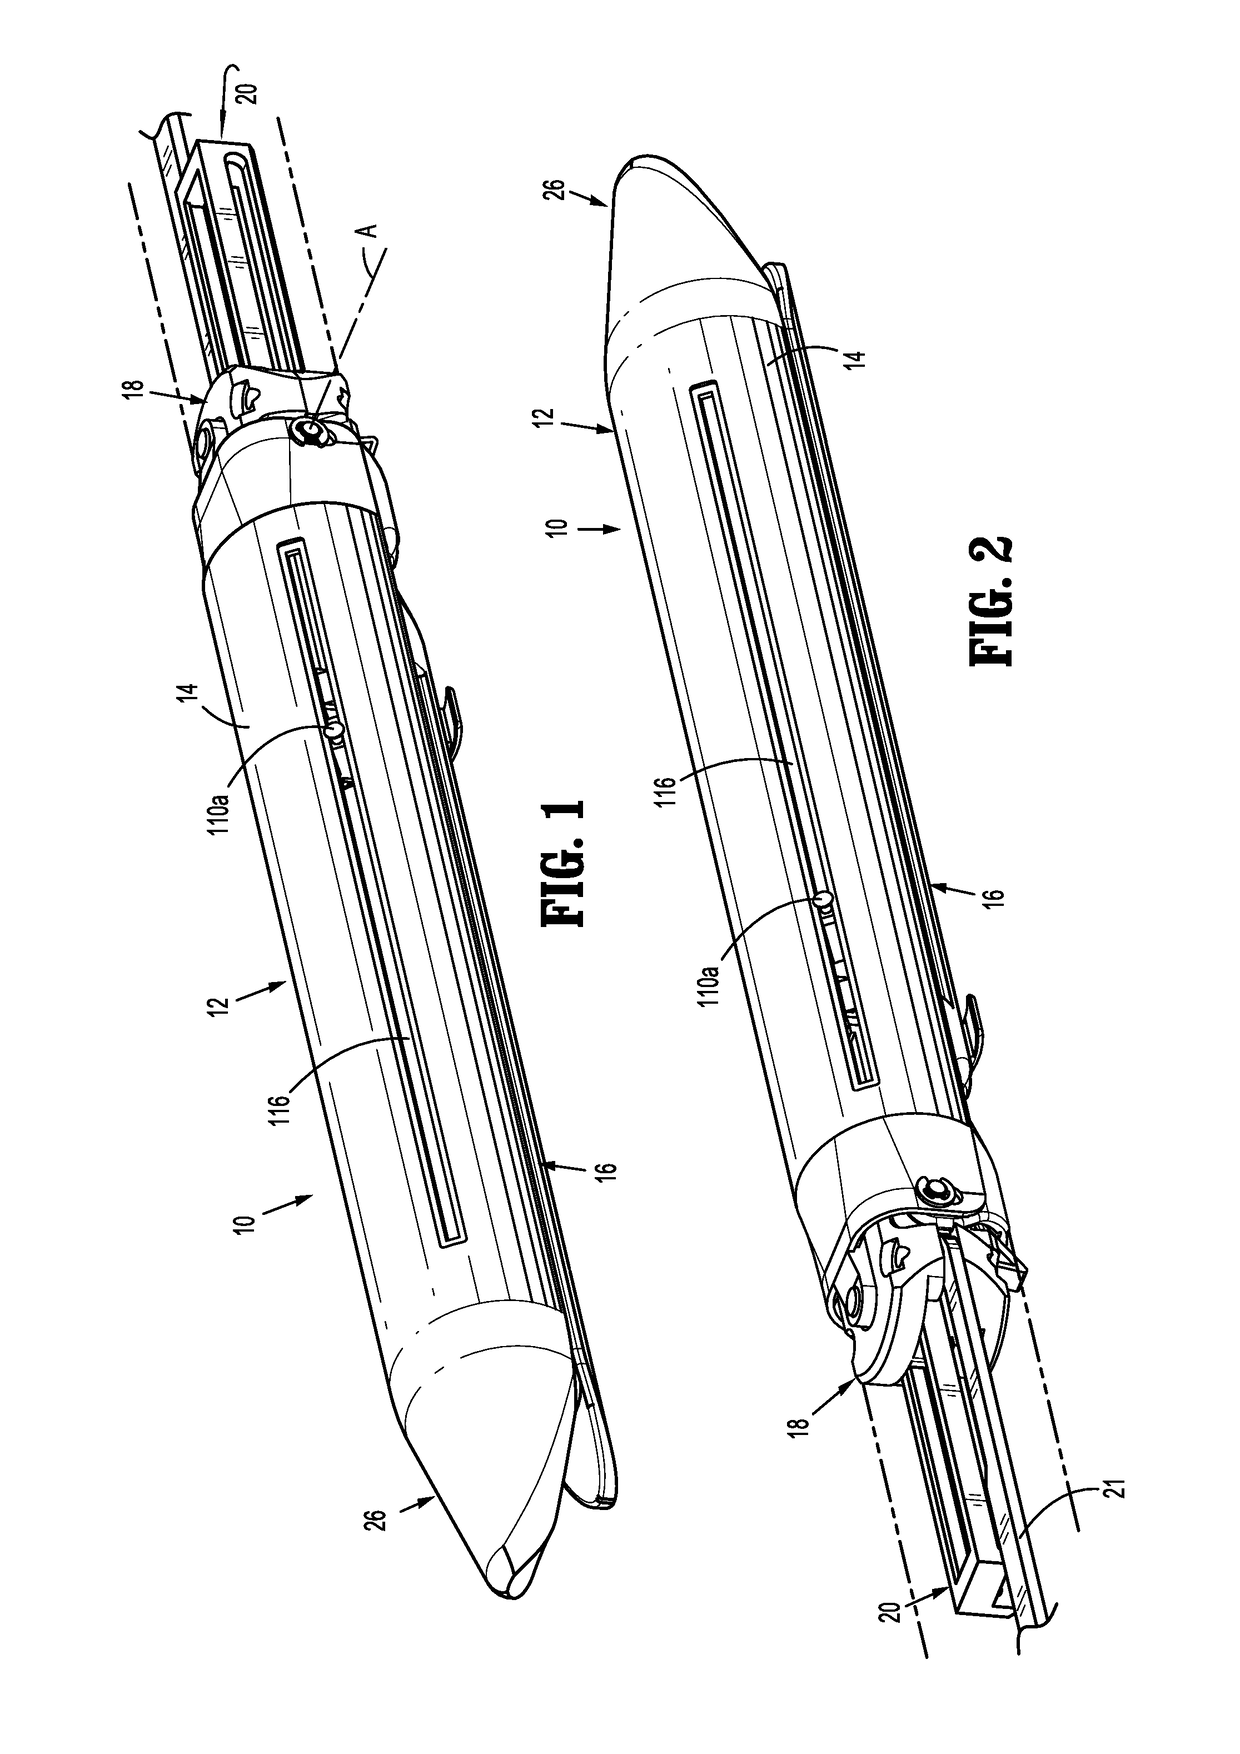 Multi-fire push rod stapling device